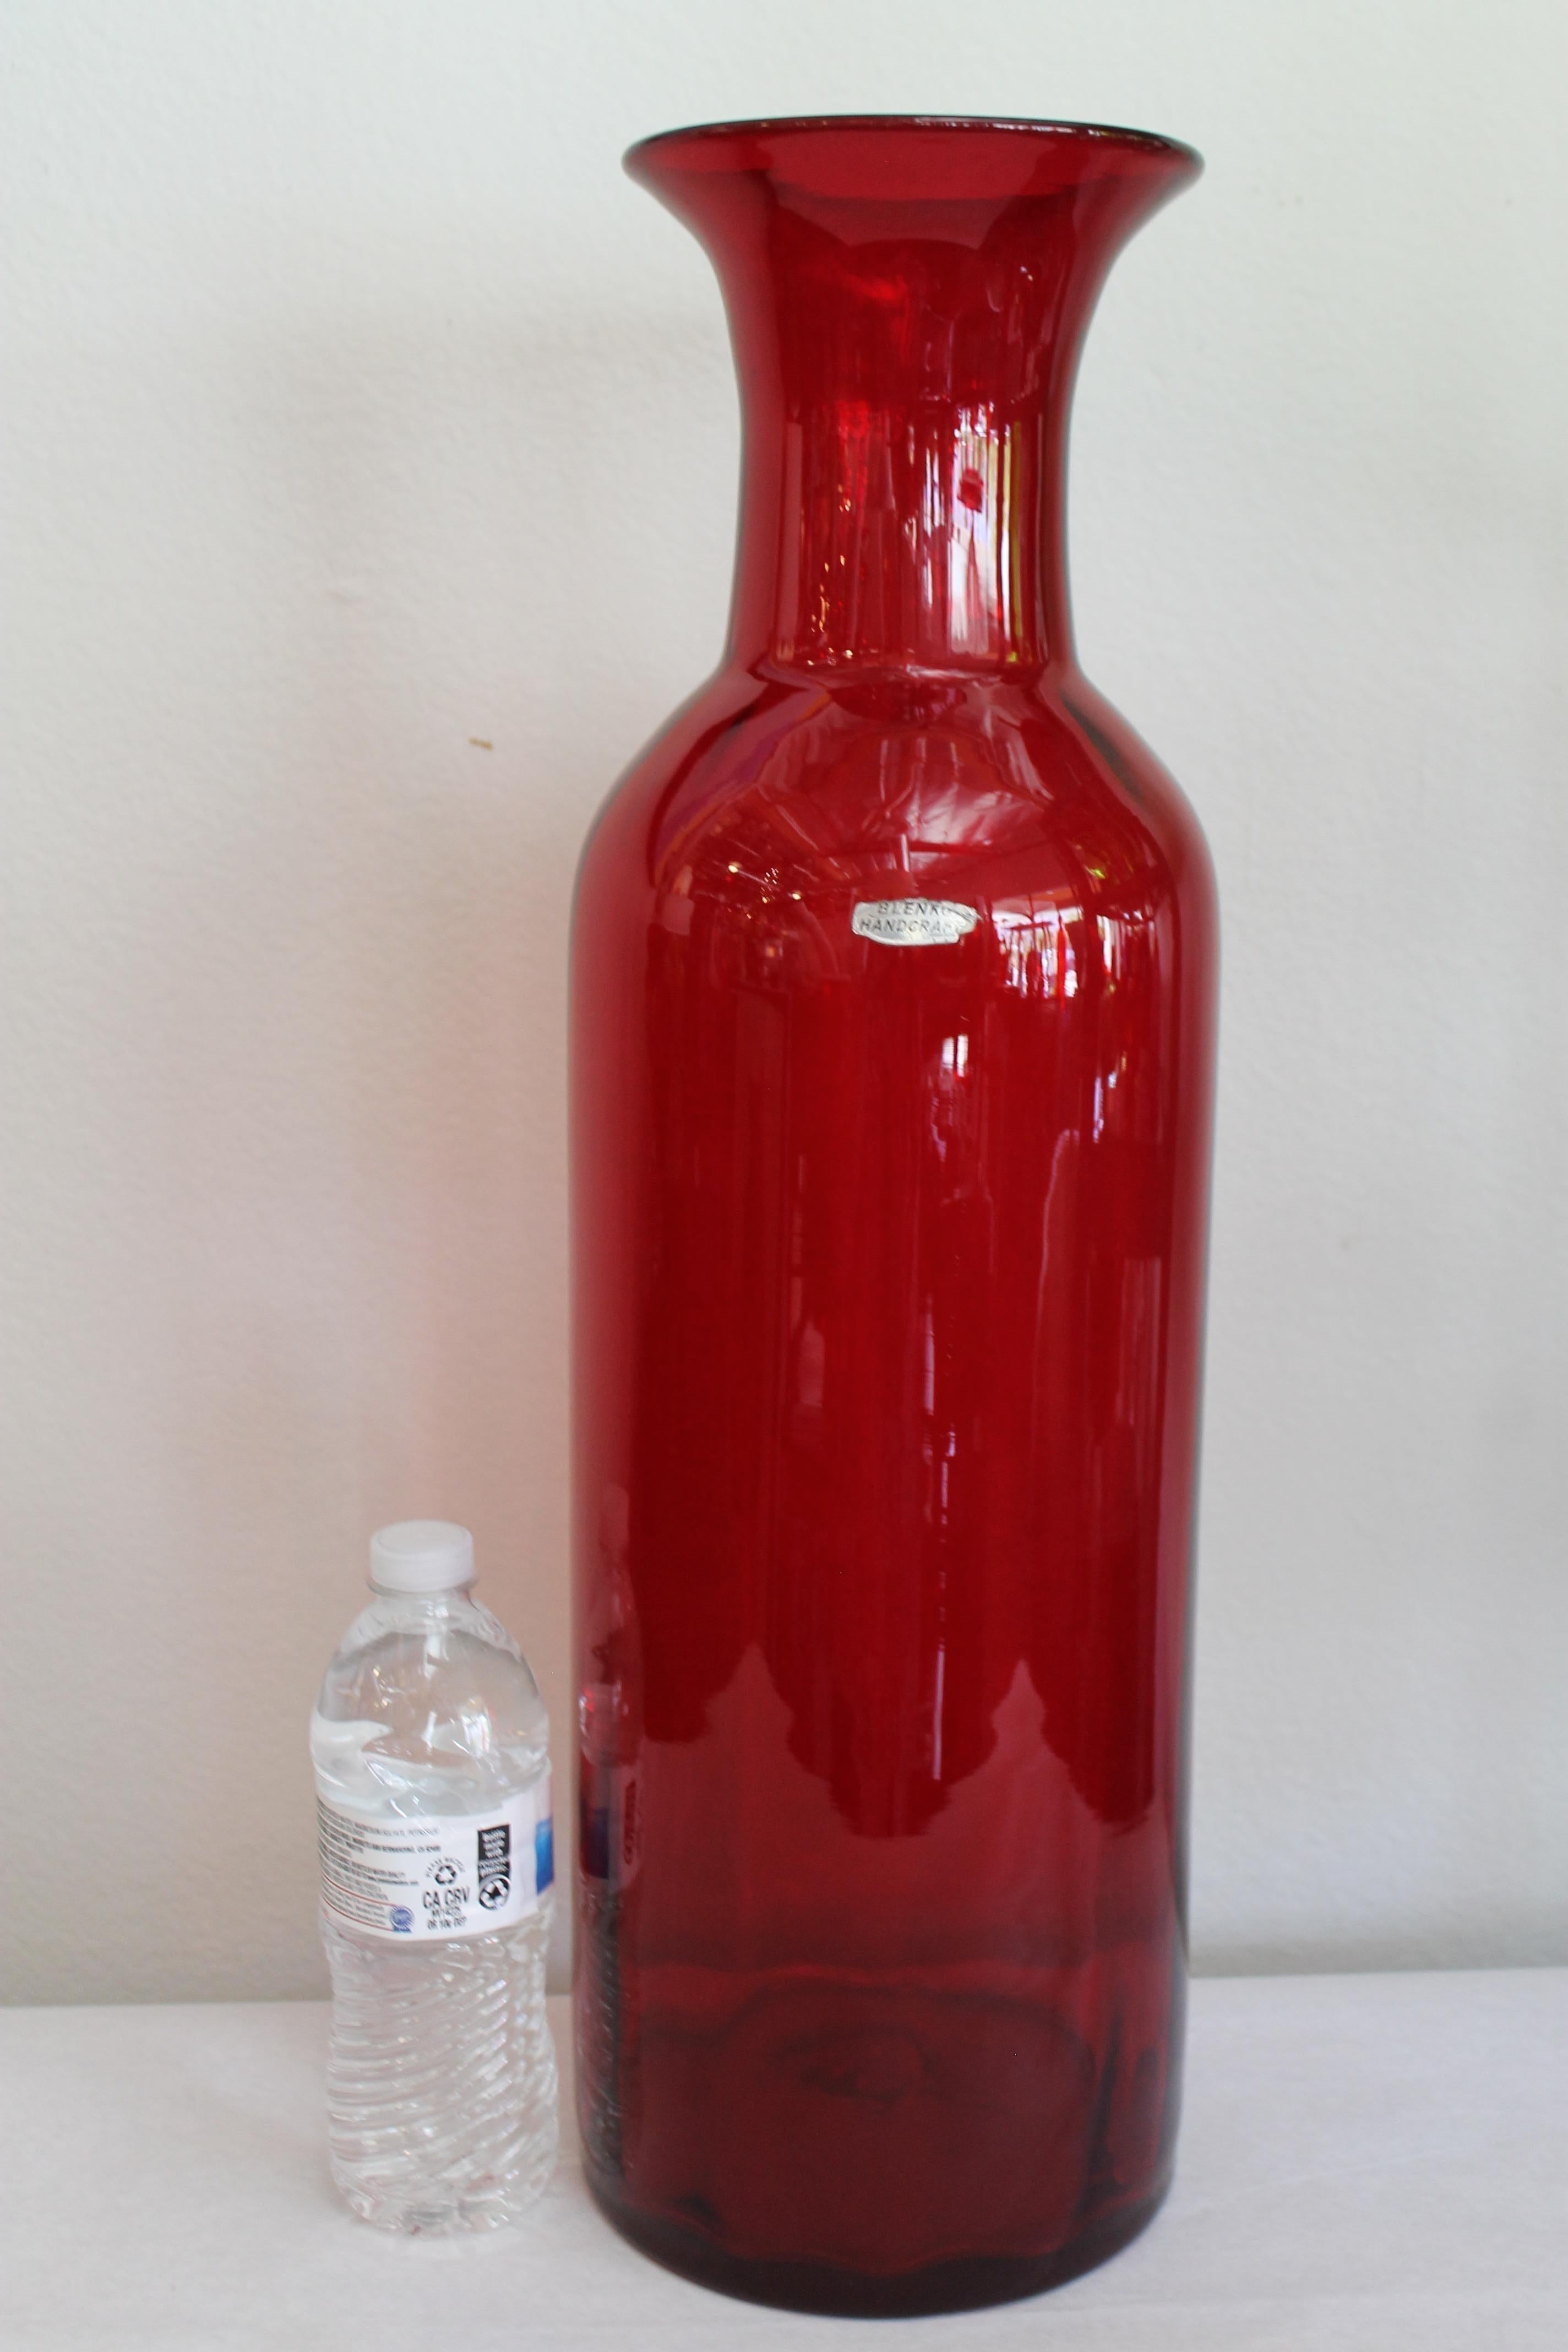 Architectural Blenko tangerine floor vessel/bottle by Wayne Husted. Bottle is 20.25